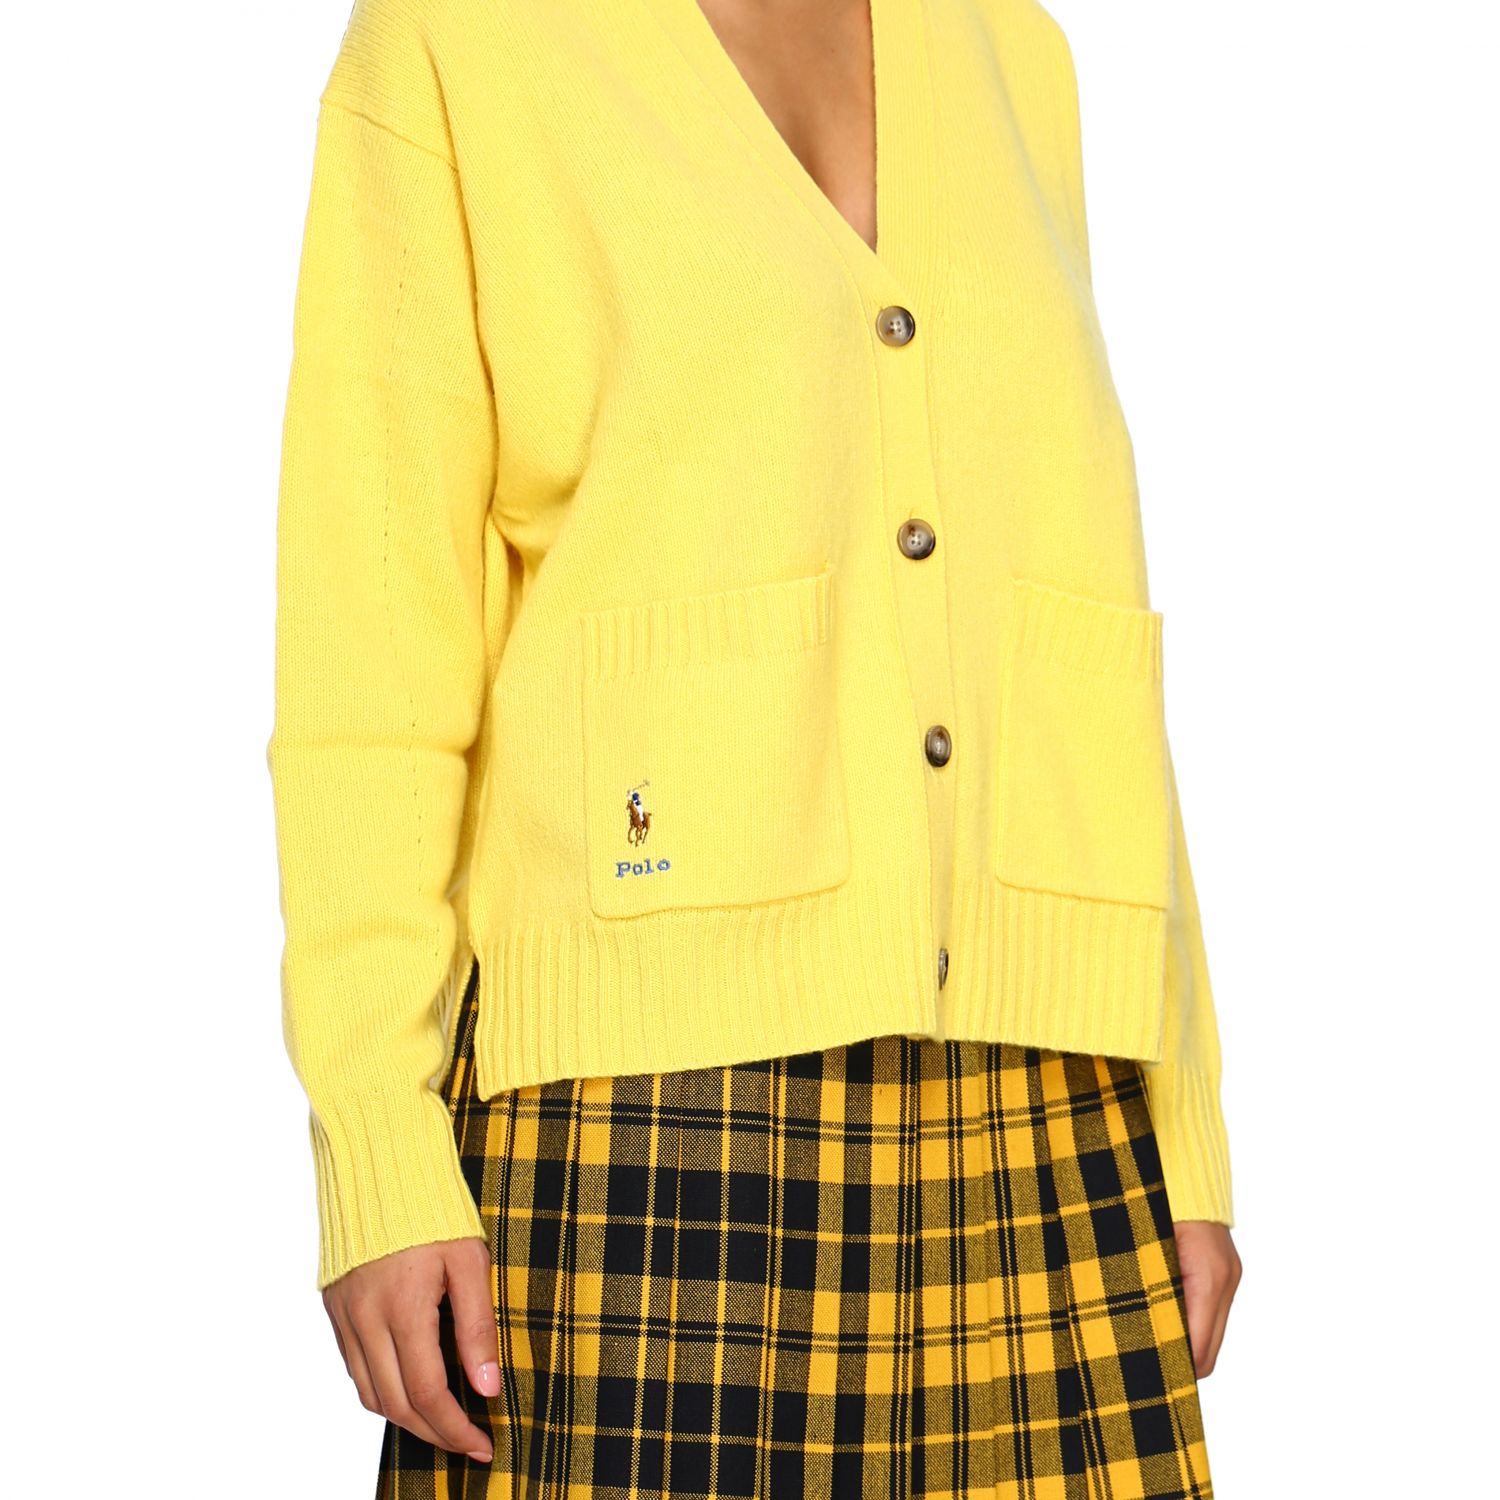 polo ralph lauren yellow sweater